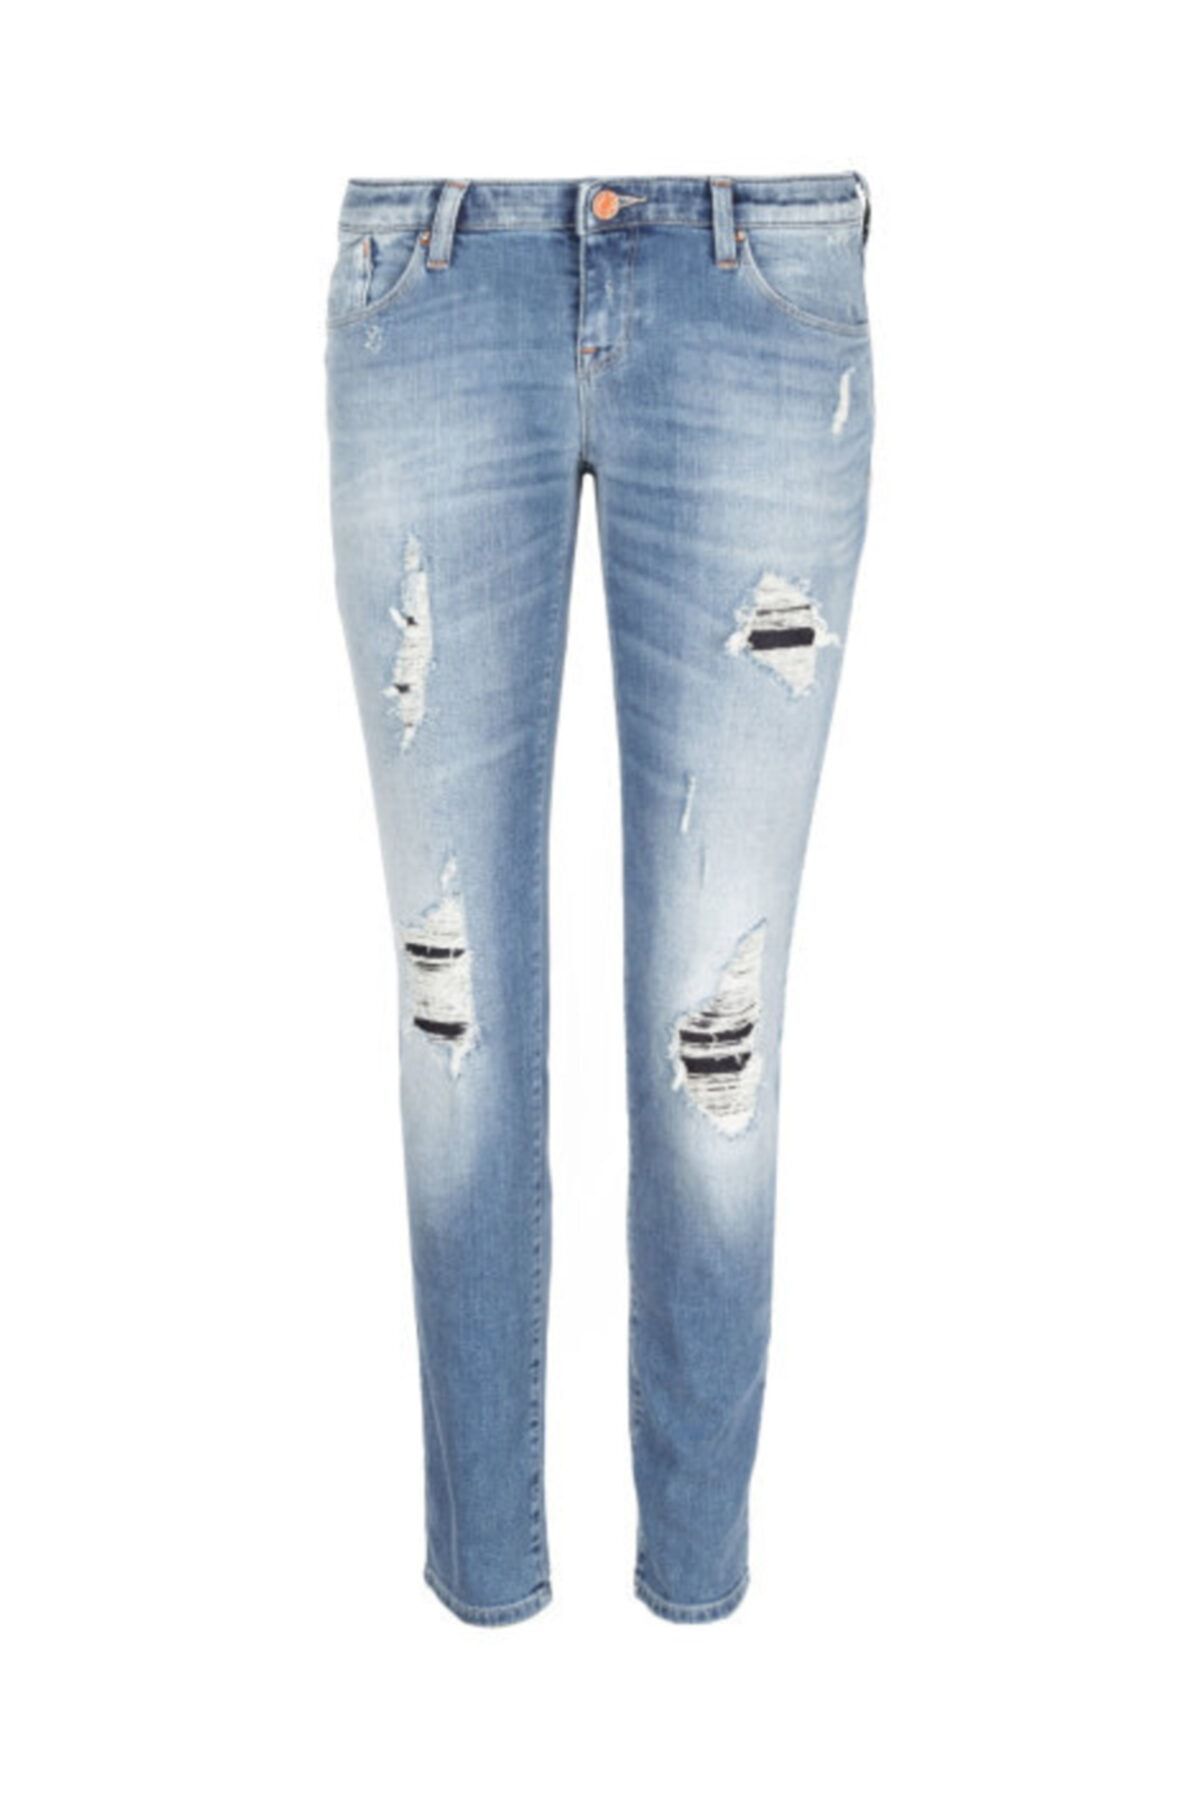 Armani Jeans Kadın Mavi Pantolon